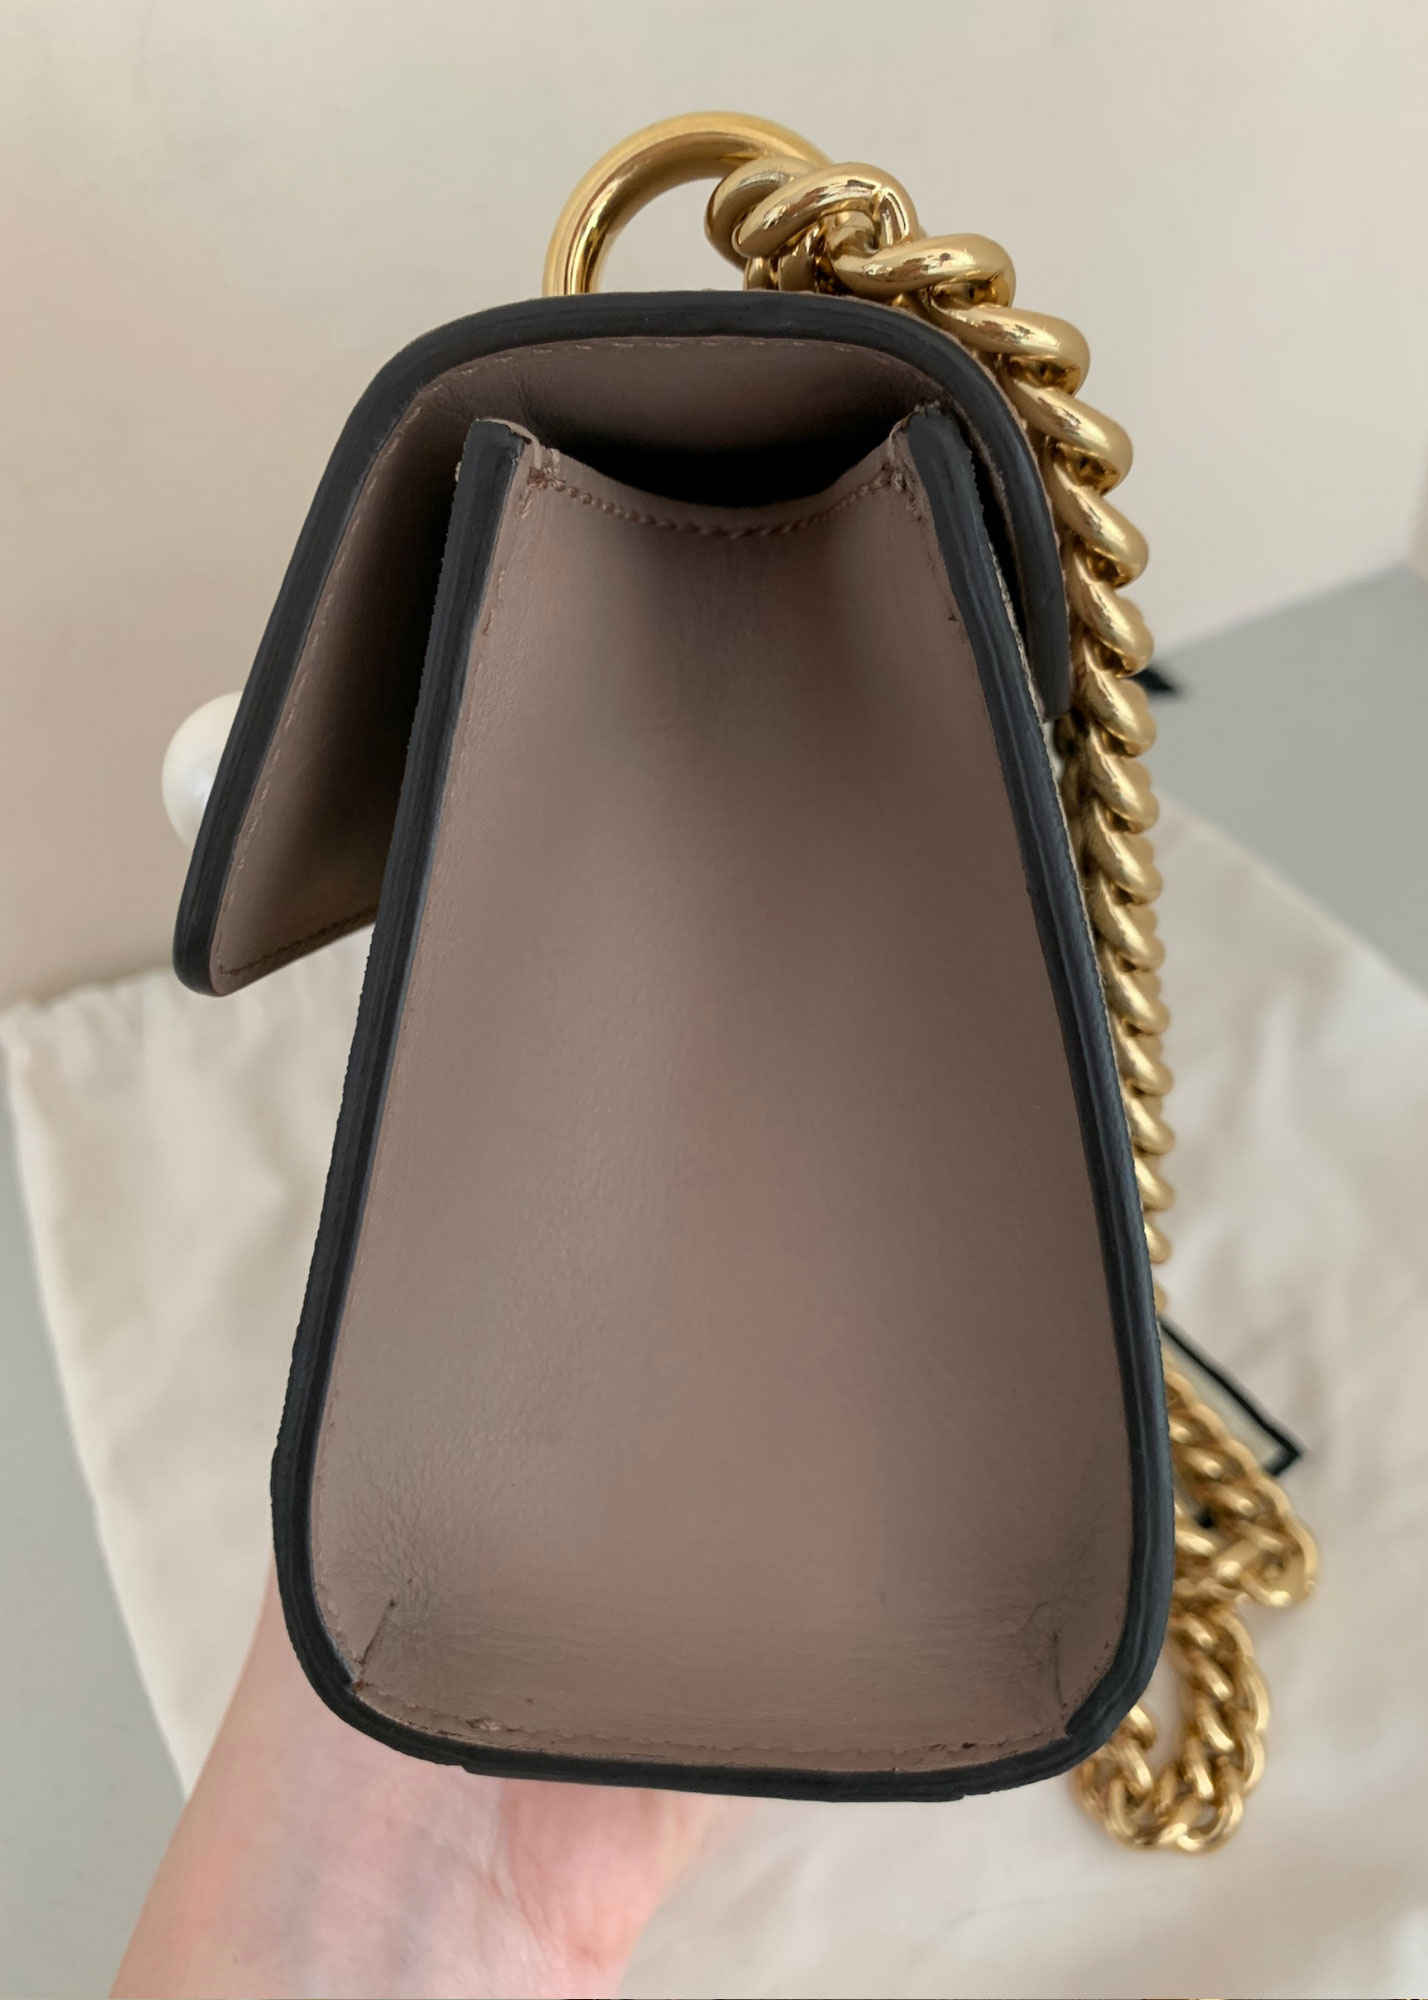 NEW GUCCI GG PADLOCK BERRY LEATHER CHAIN SMALL SHOULDER BAG CROSS-BODY  HANDBAG